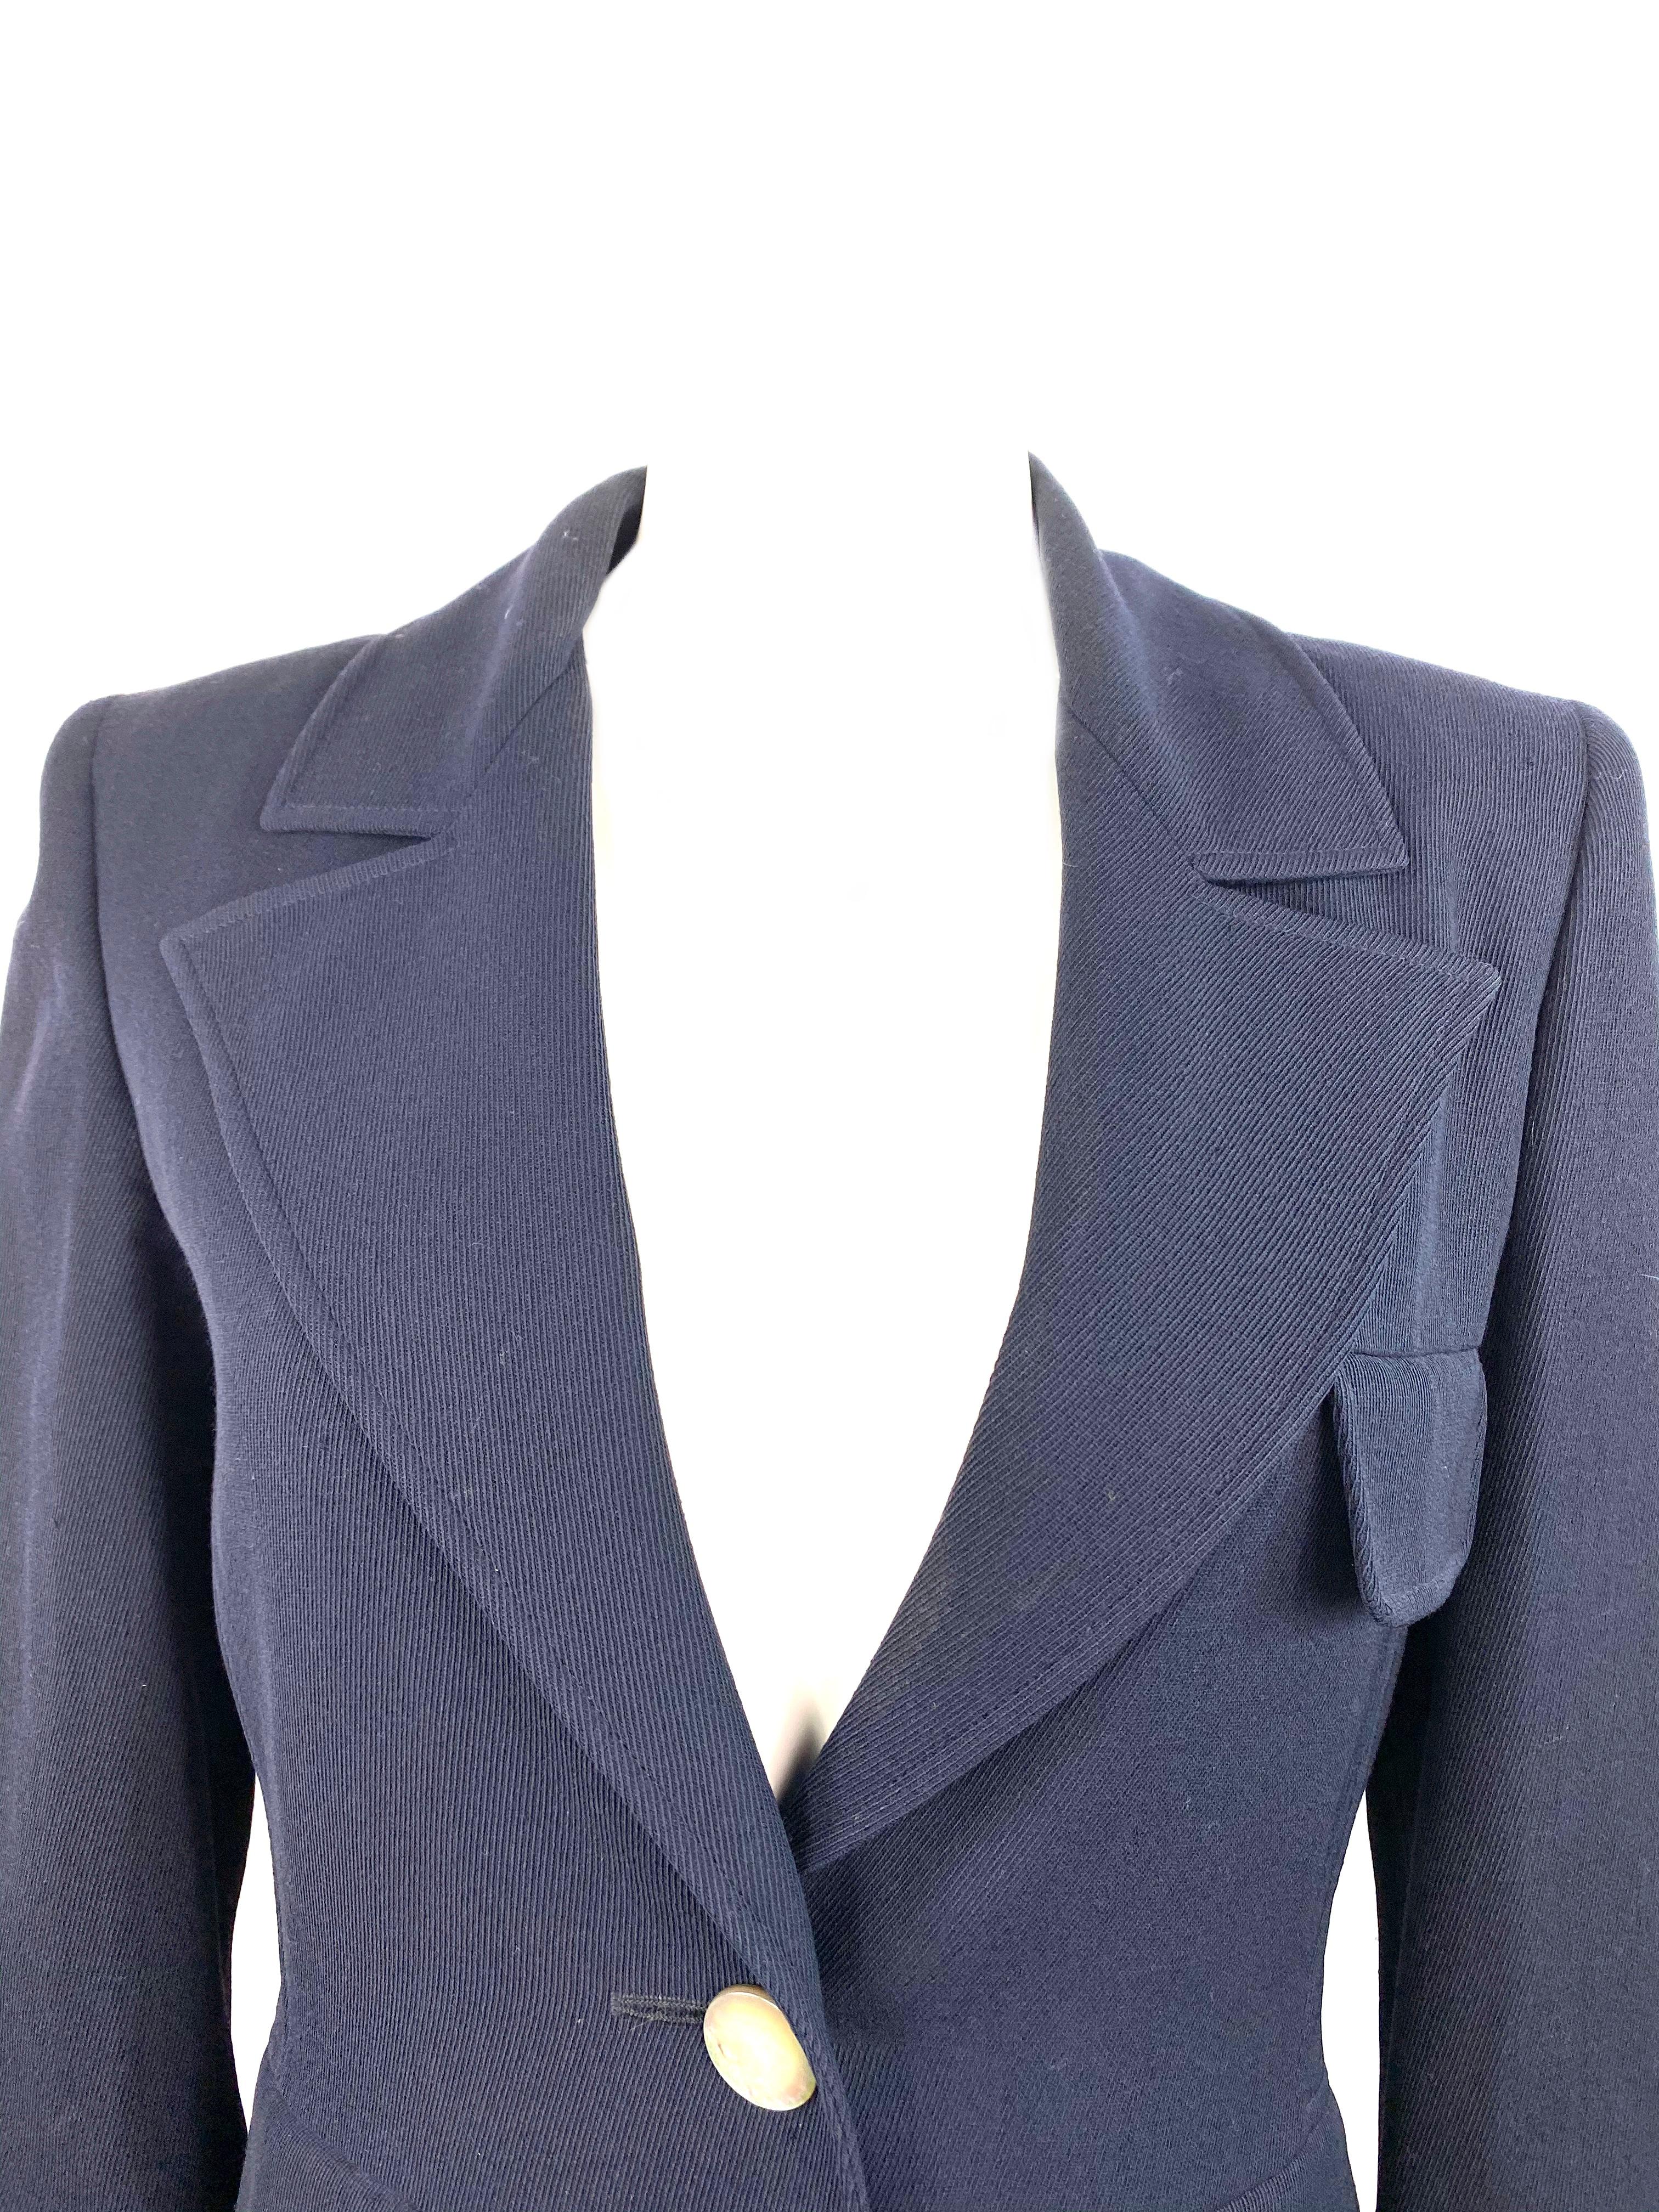 Purple Valentino Boutique Navy Blazer Jacket Size 6 For Sale